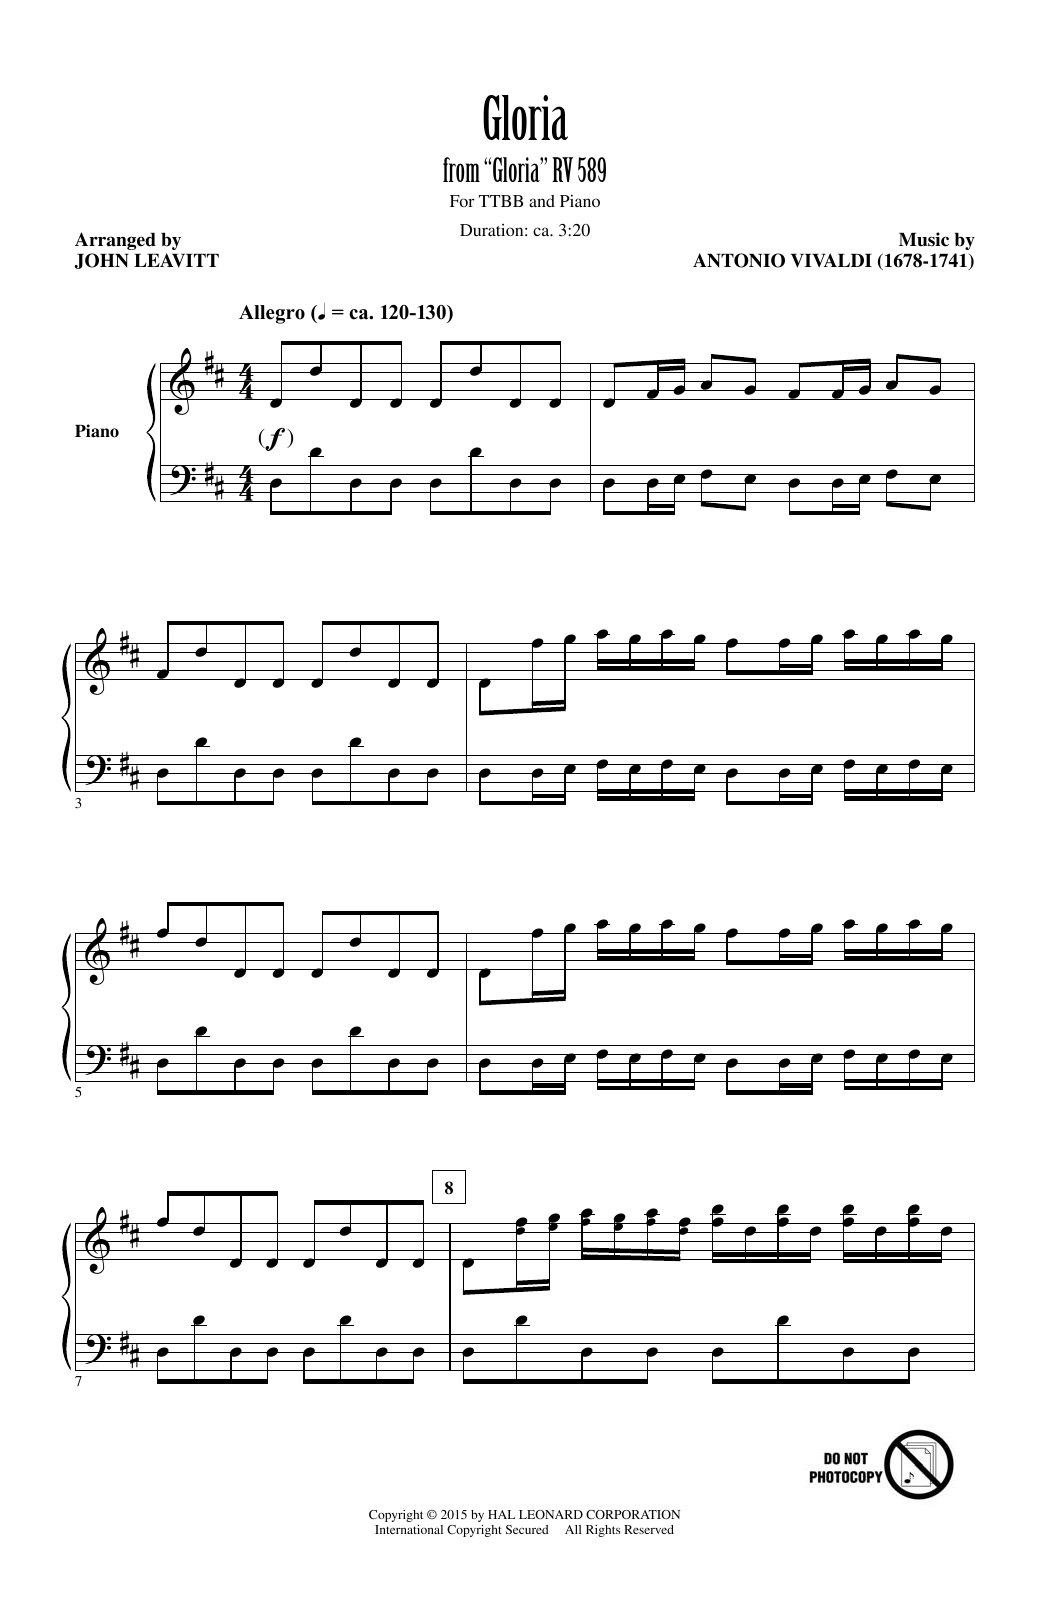 Download Antonio Vivaldi Gloria In Excelsis (Arr. John Leavitt) Sheet Music and learn how to play TTBB PDF digital score in minutes